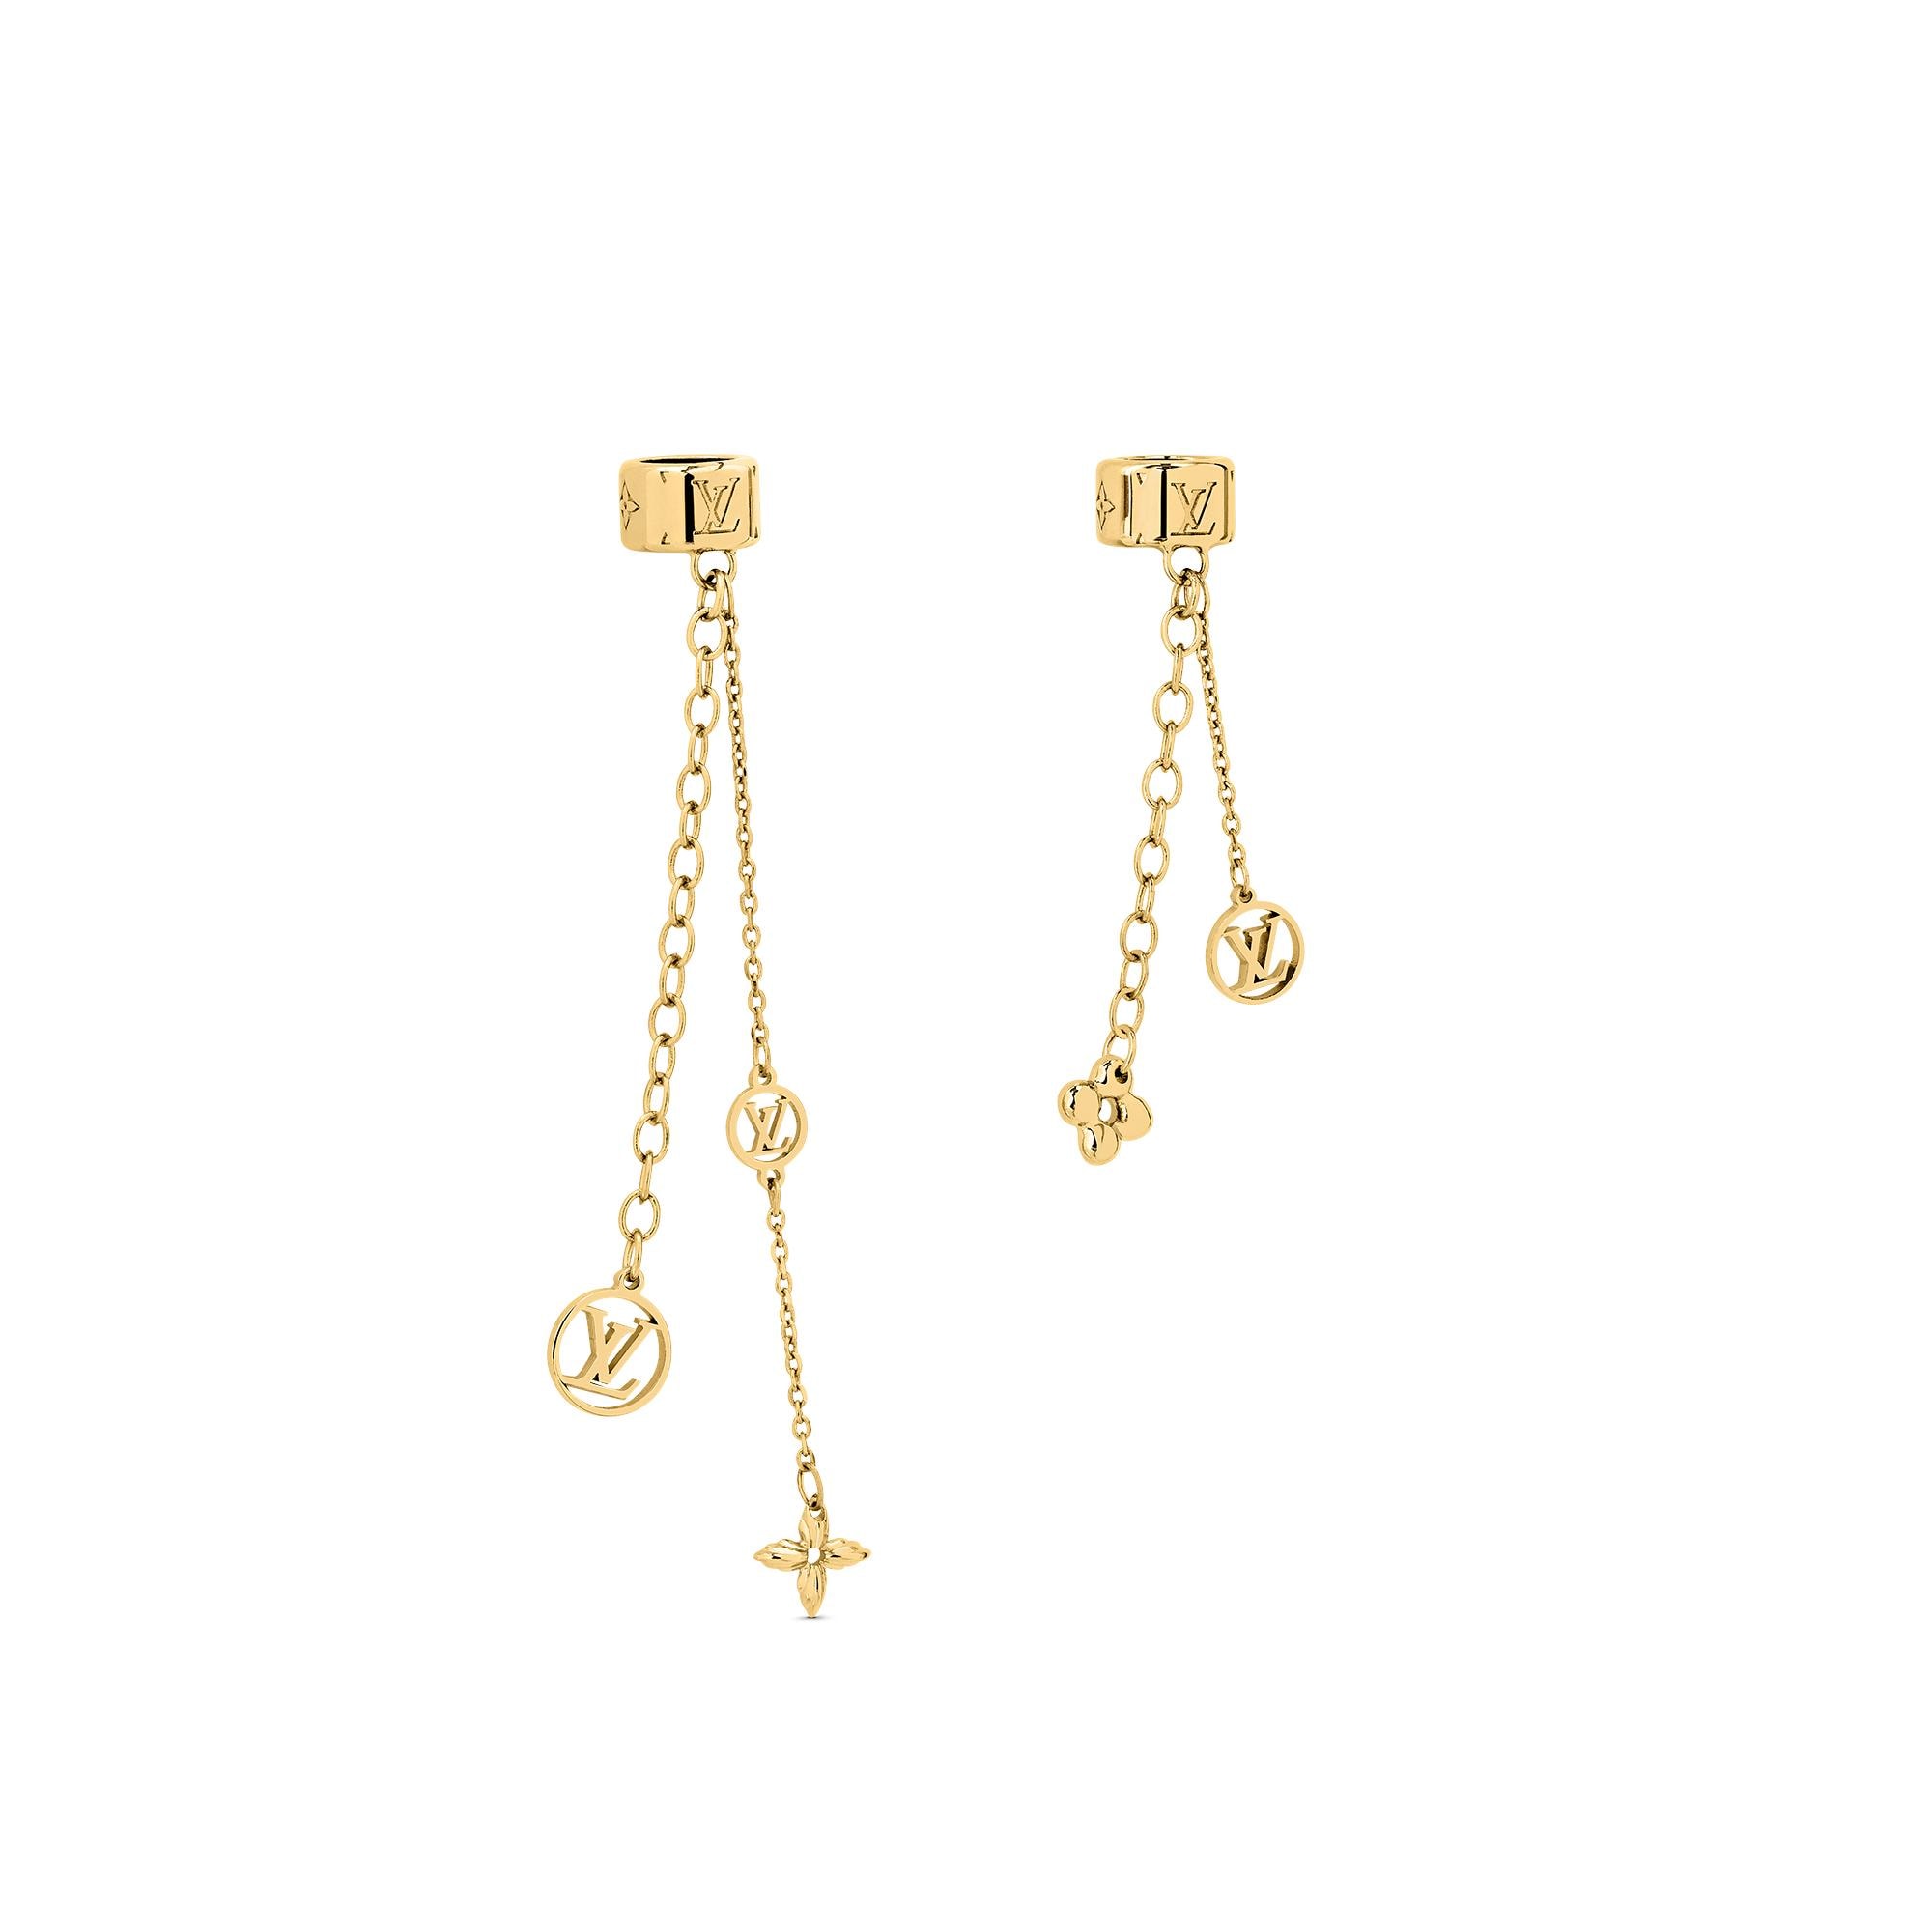 Looksboutique_ - Louis Vuitton ear cuff 💲1️⃣8️⃣0️⃣, Louis Vuitton long  dangling chain 💲3️⃣2️⃣0️⃣